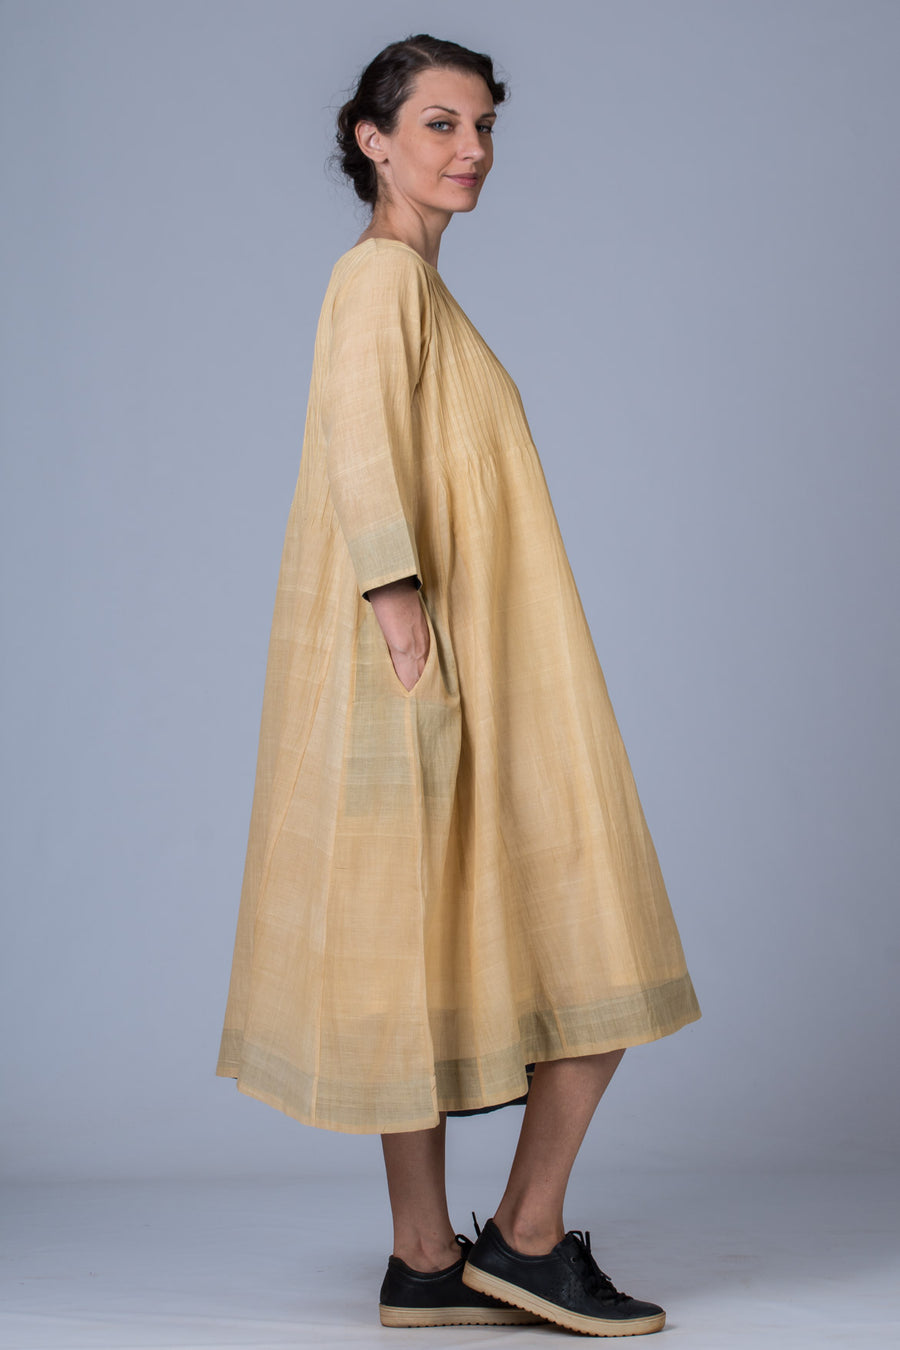 Neem dyed Organic cotton Dress - UDUPU - Upasana Design Studio